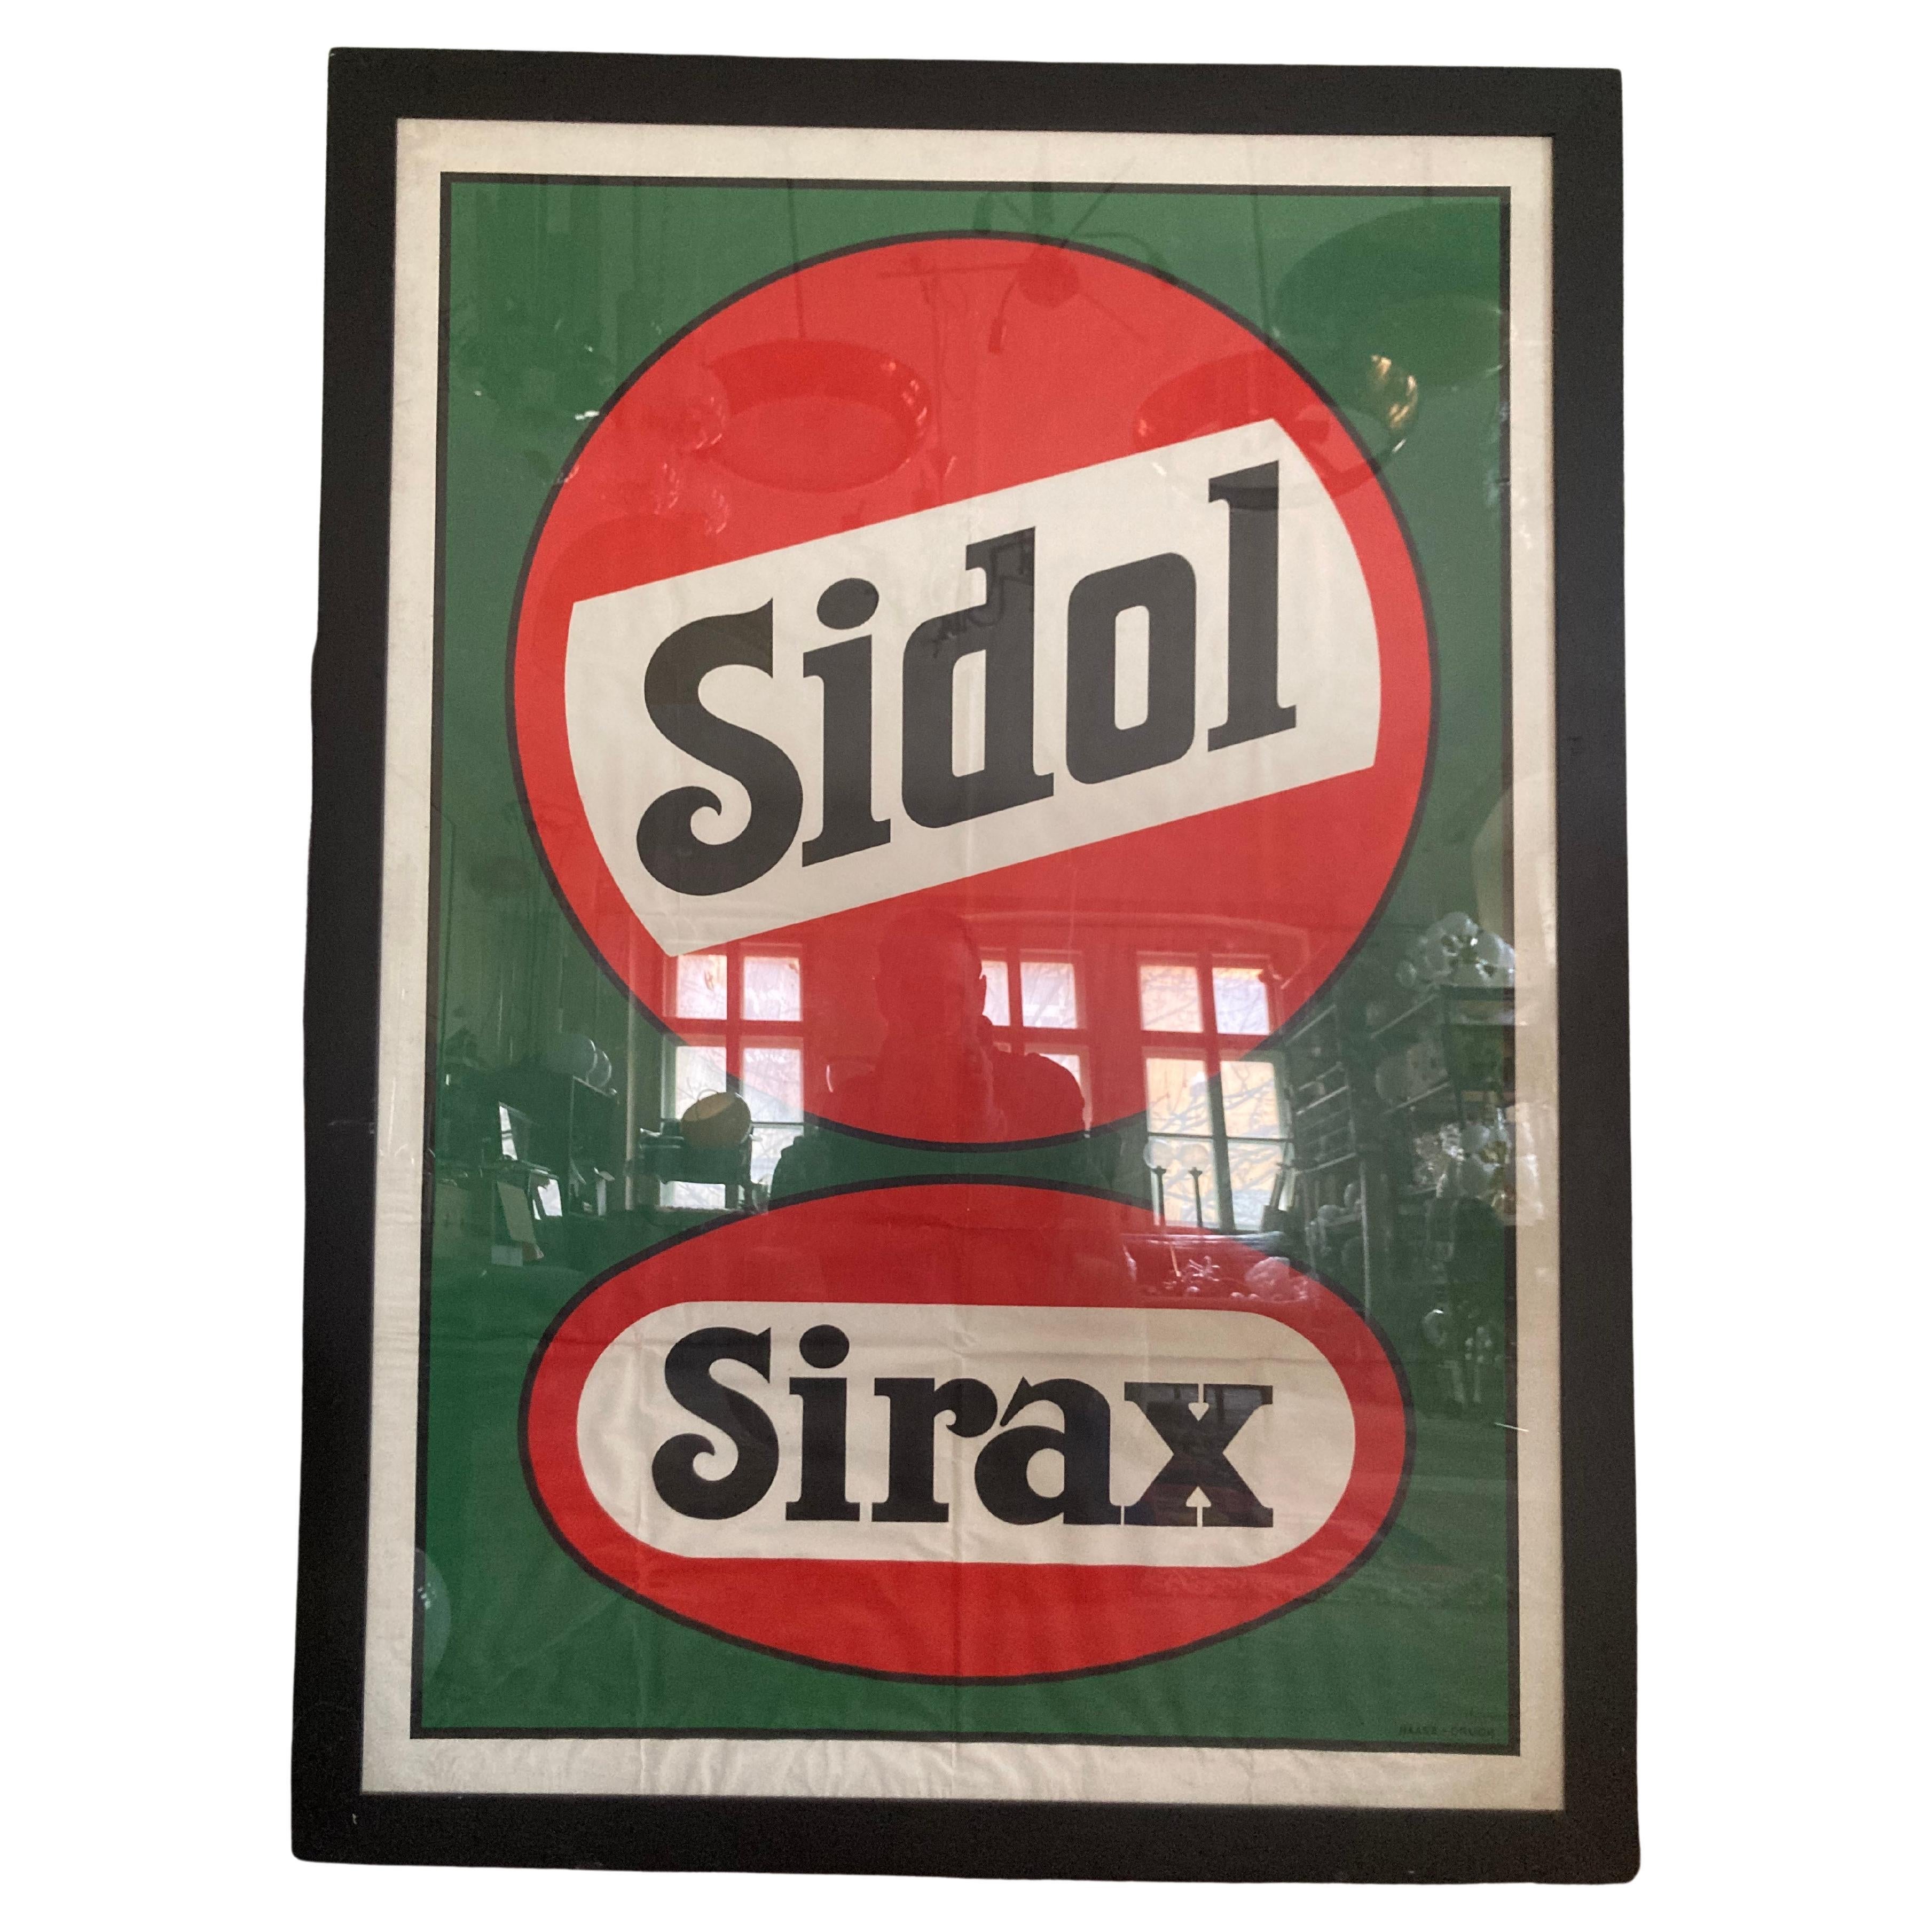 BIG Art Deco Original Advertising Promotional Poster SIDOL, 1930s